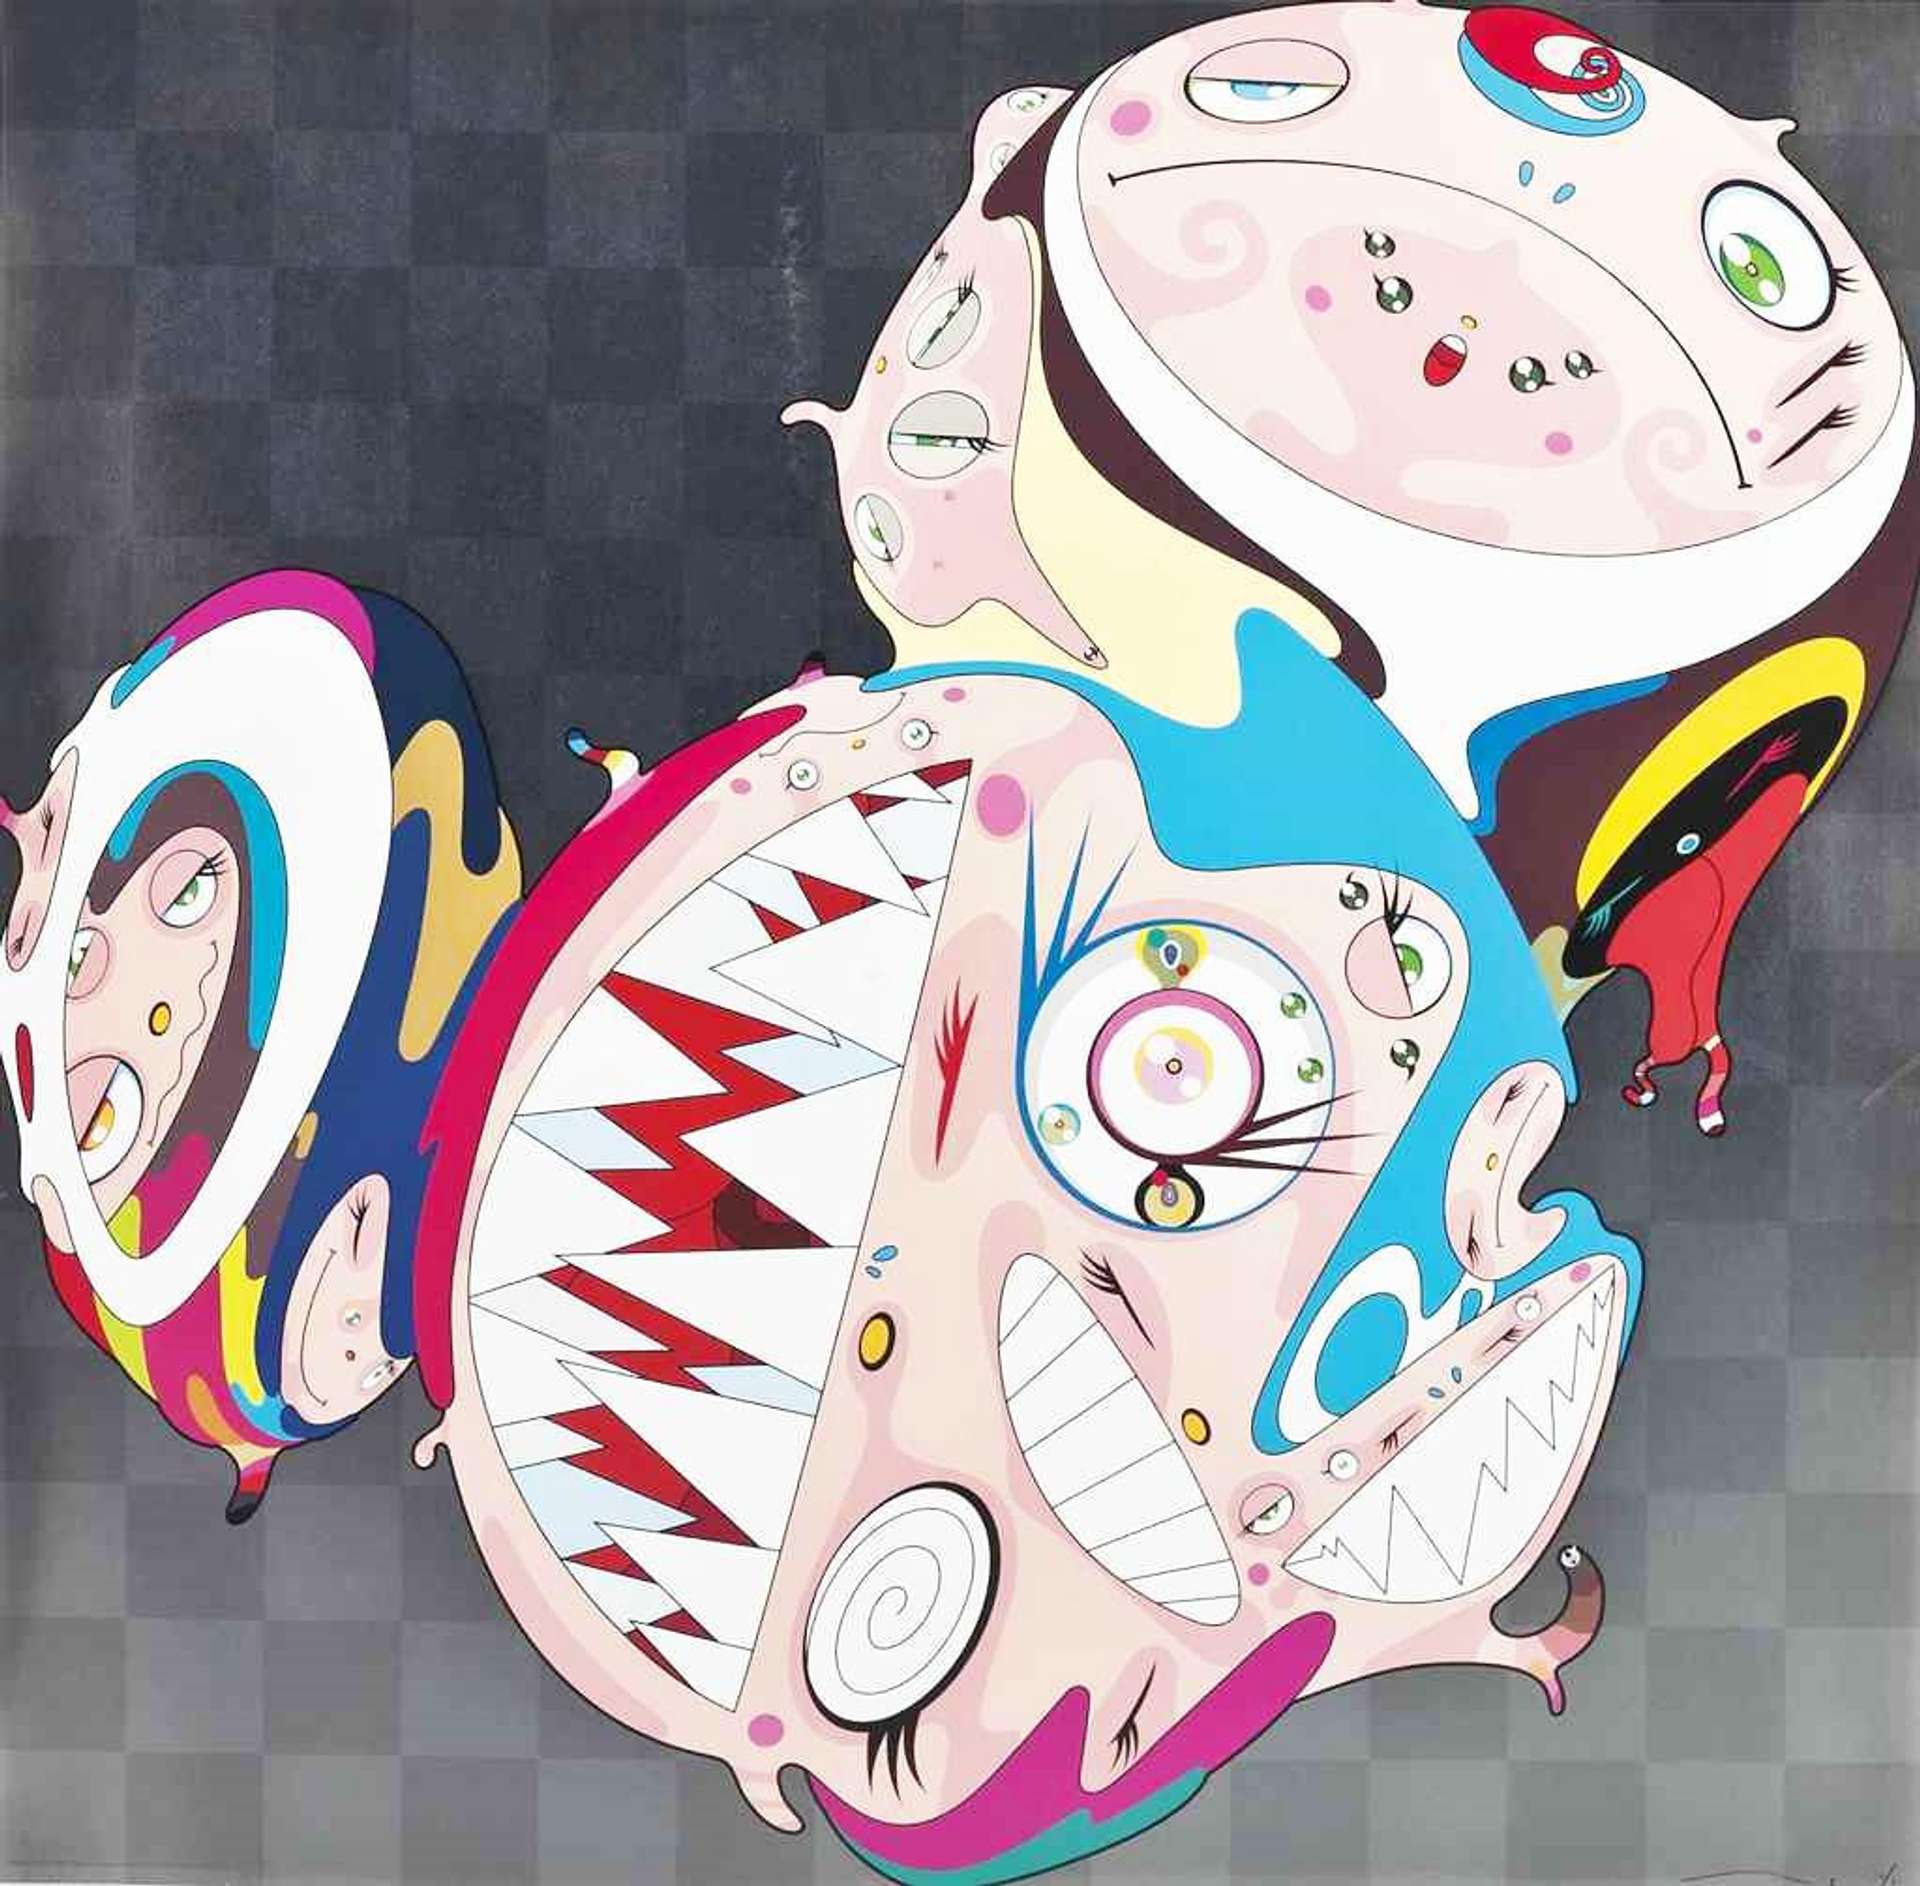 Takashi Murakami: the pop artist on cartoons, capitalism and what